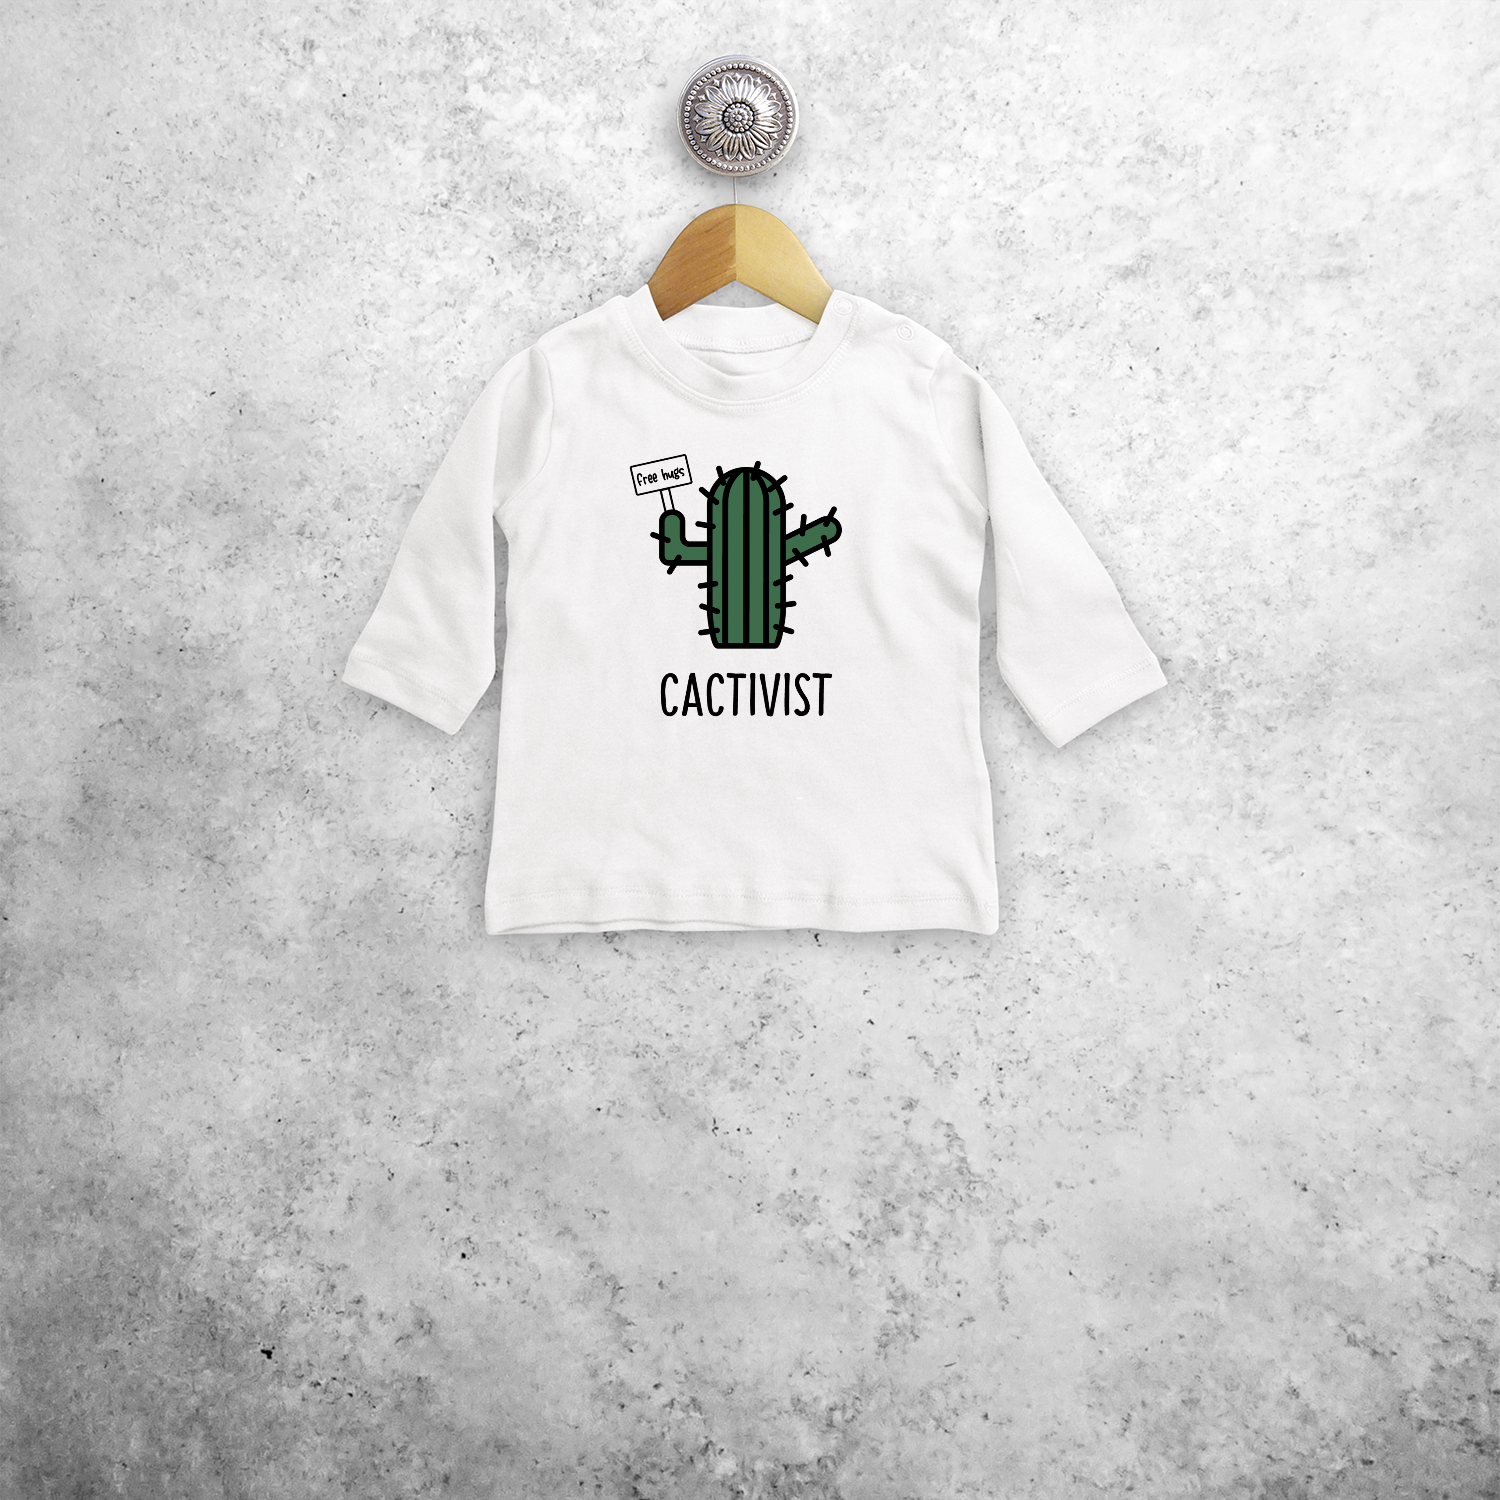 'Cactivist' baby longsleeve shirt